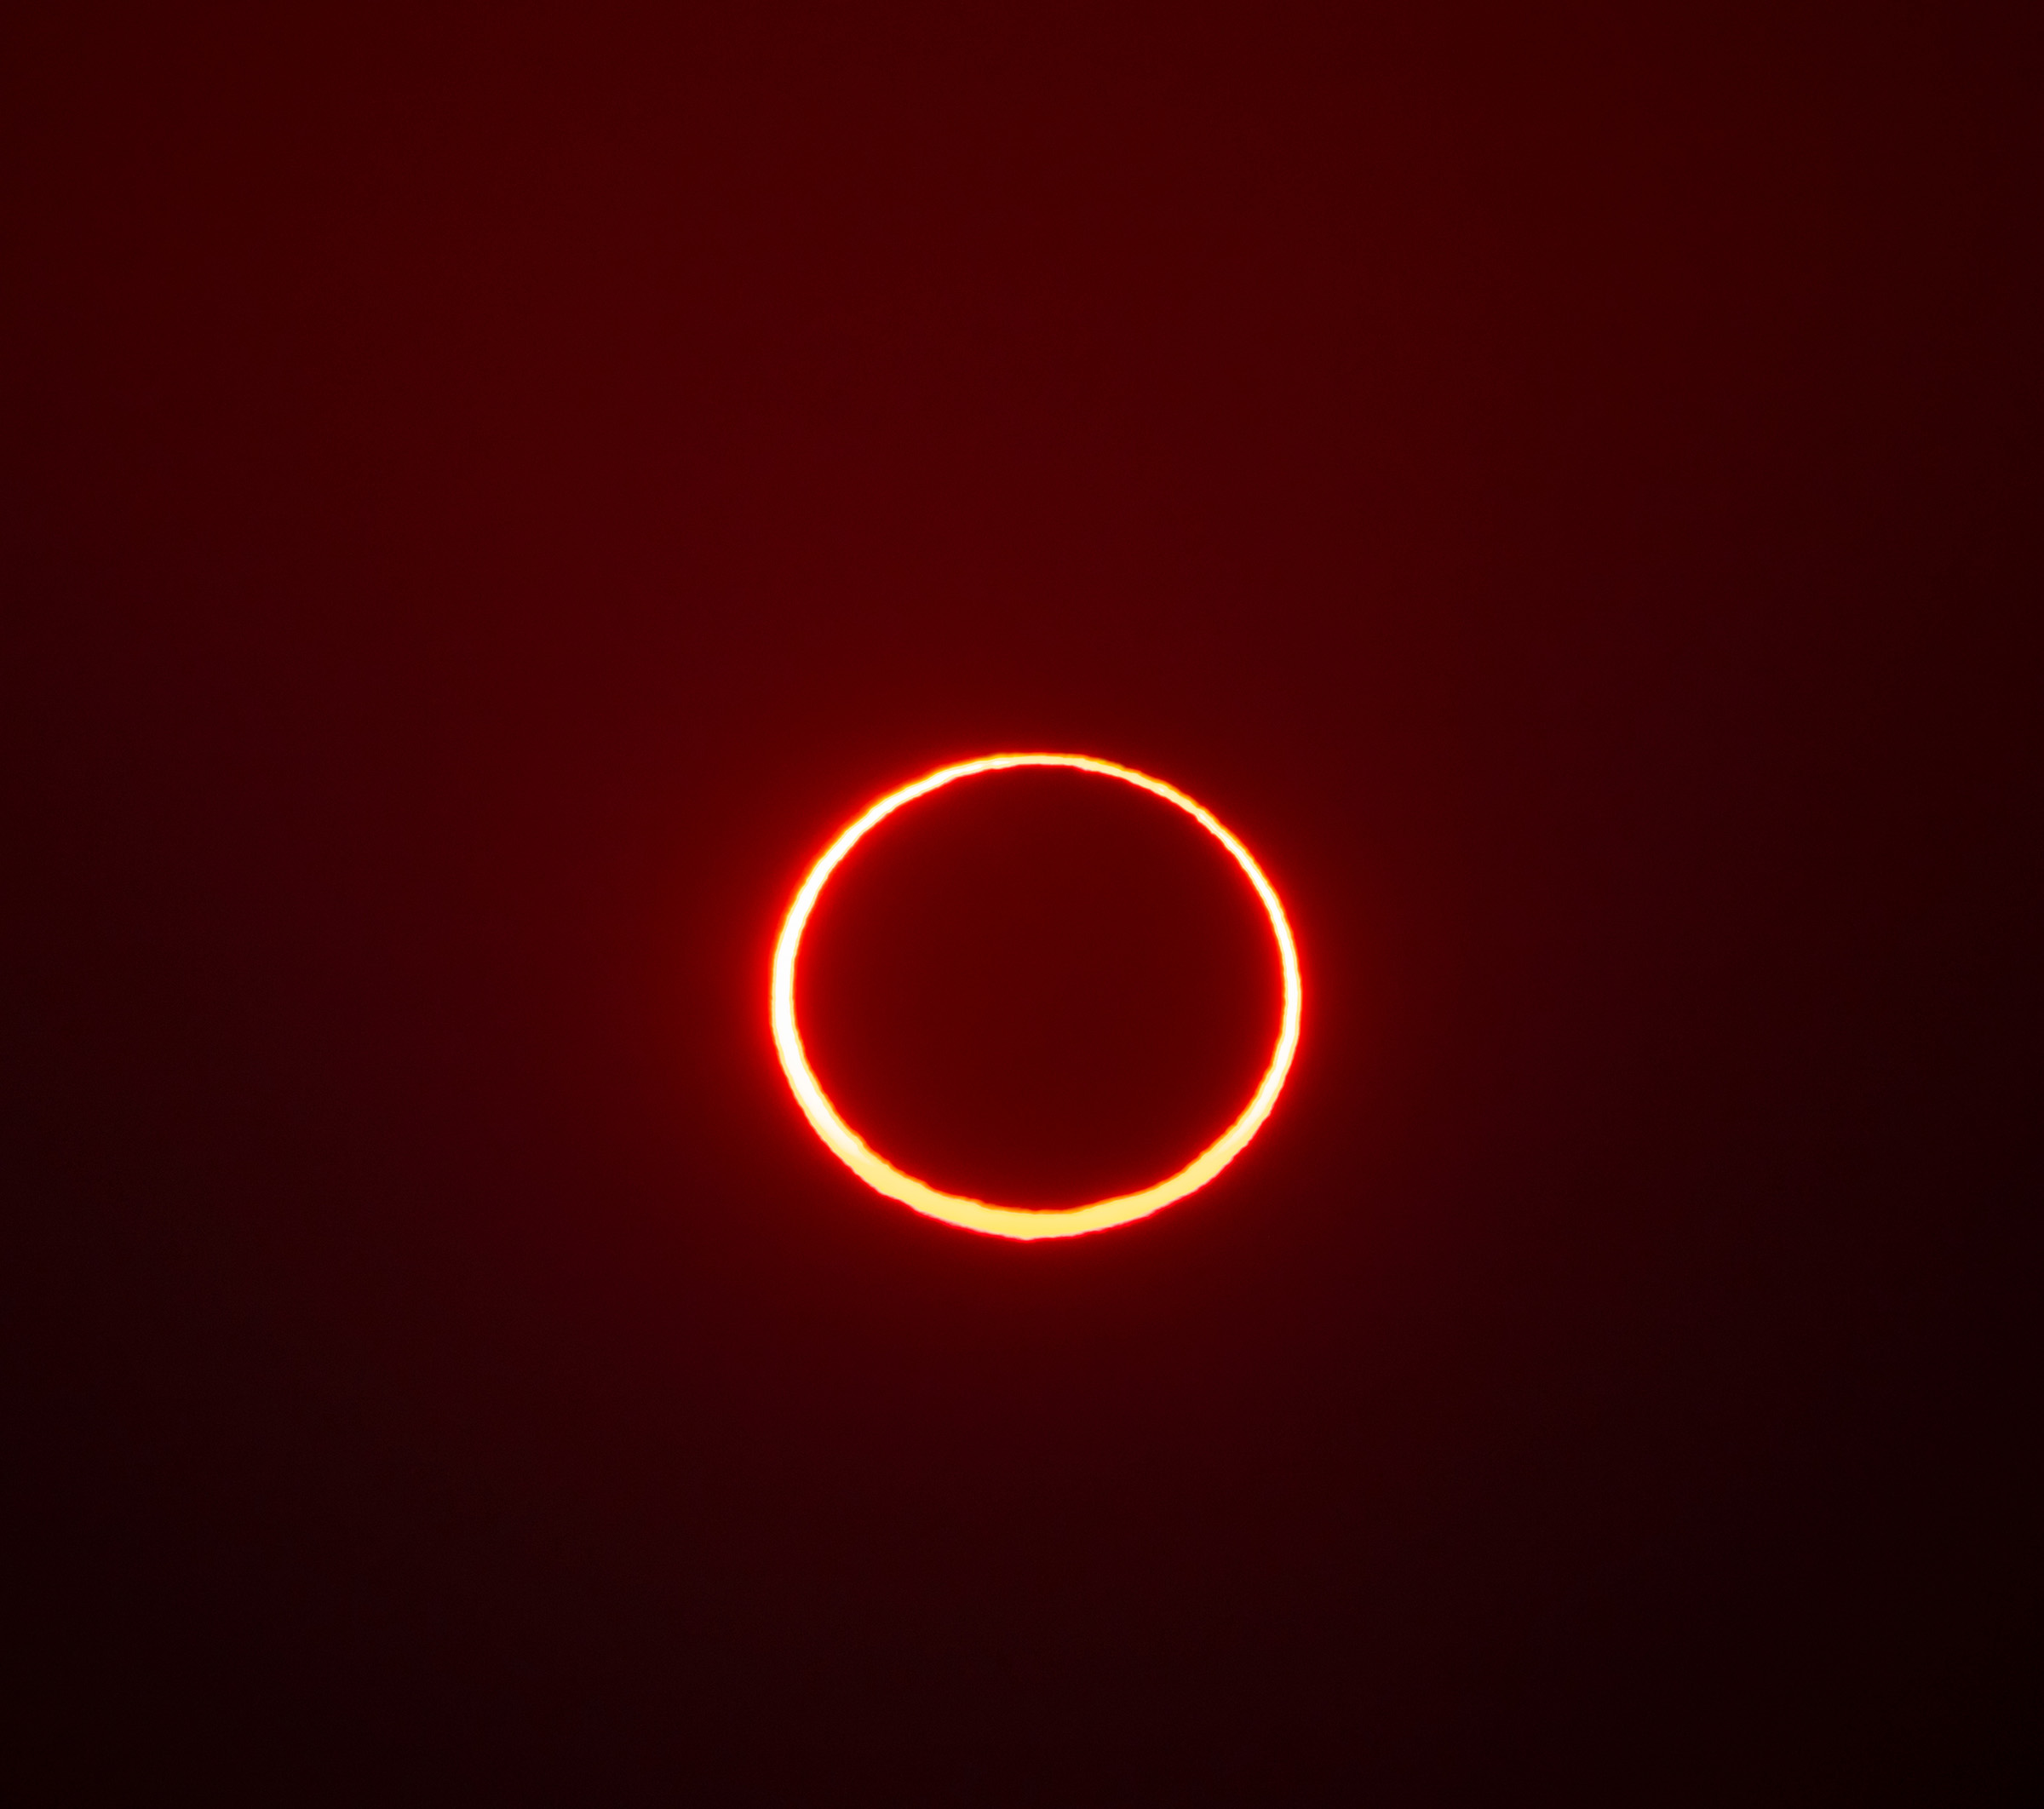 Combine October's “Ring of Fire” Eclipse with Stargazing - Sky & Telescope  - Sky & Telescope